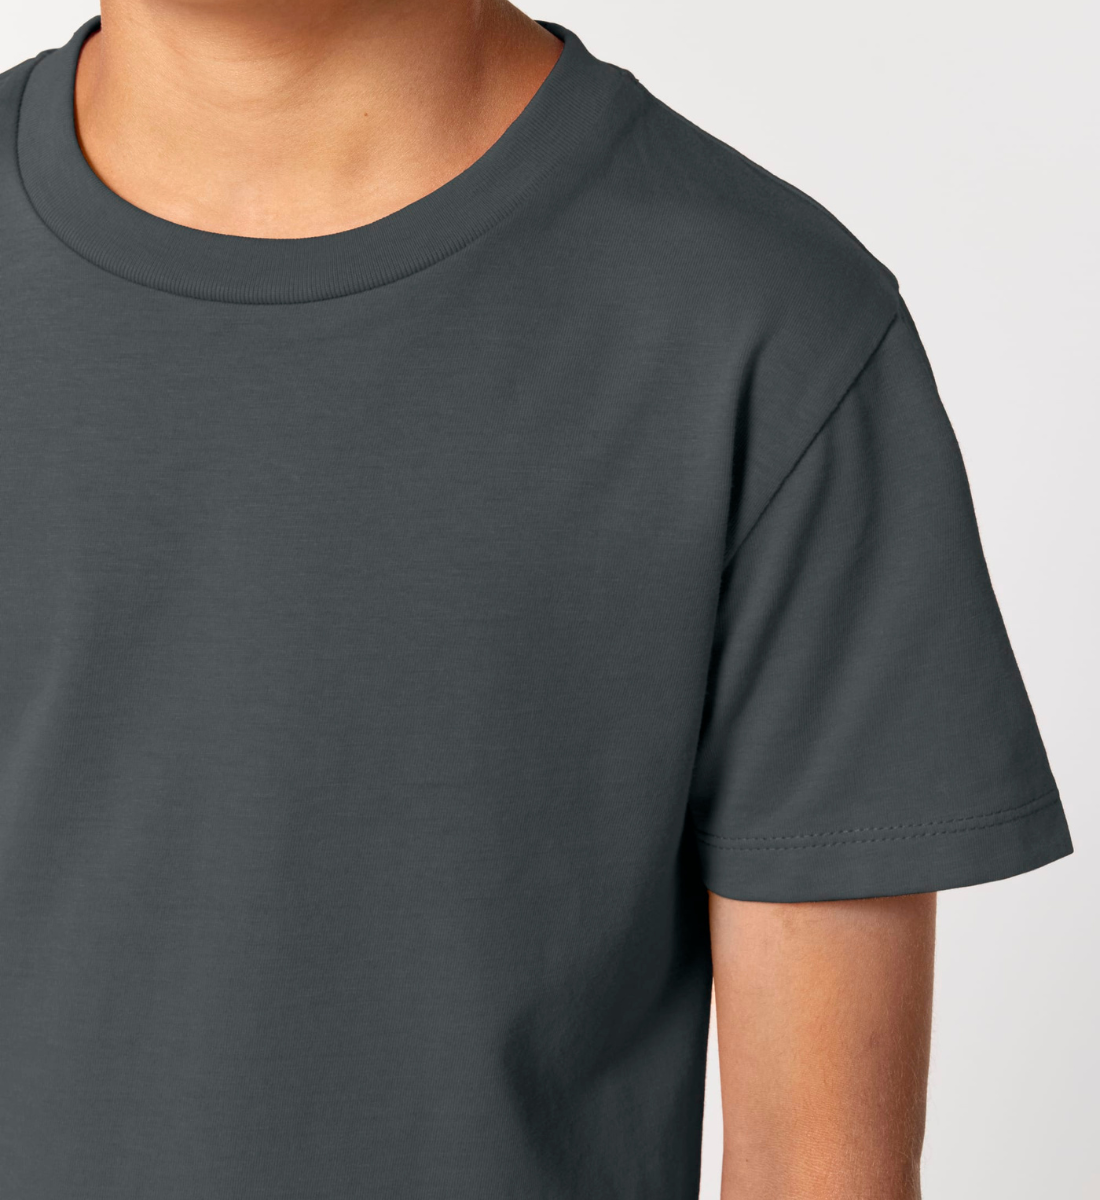 Sonnengruß II - Kinder Bio T-Shirt Unisex